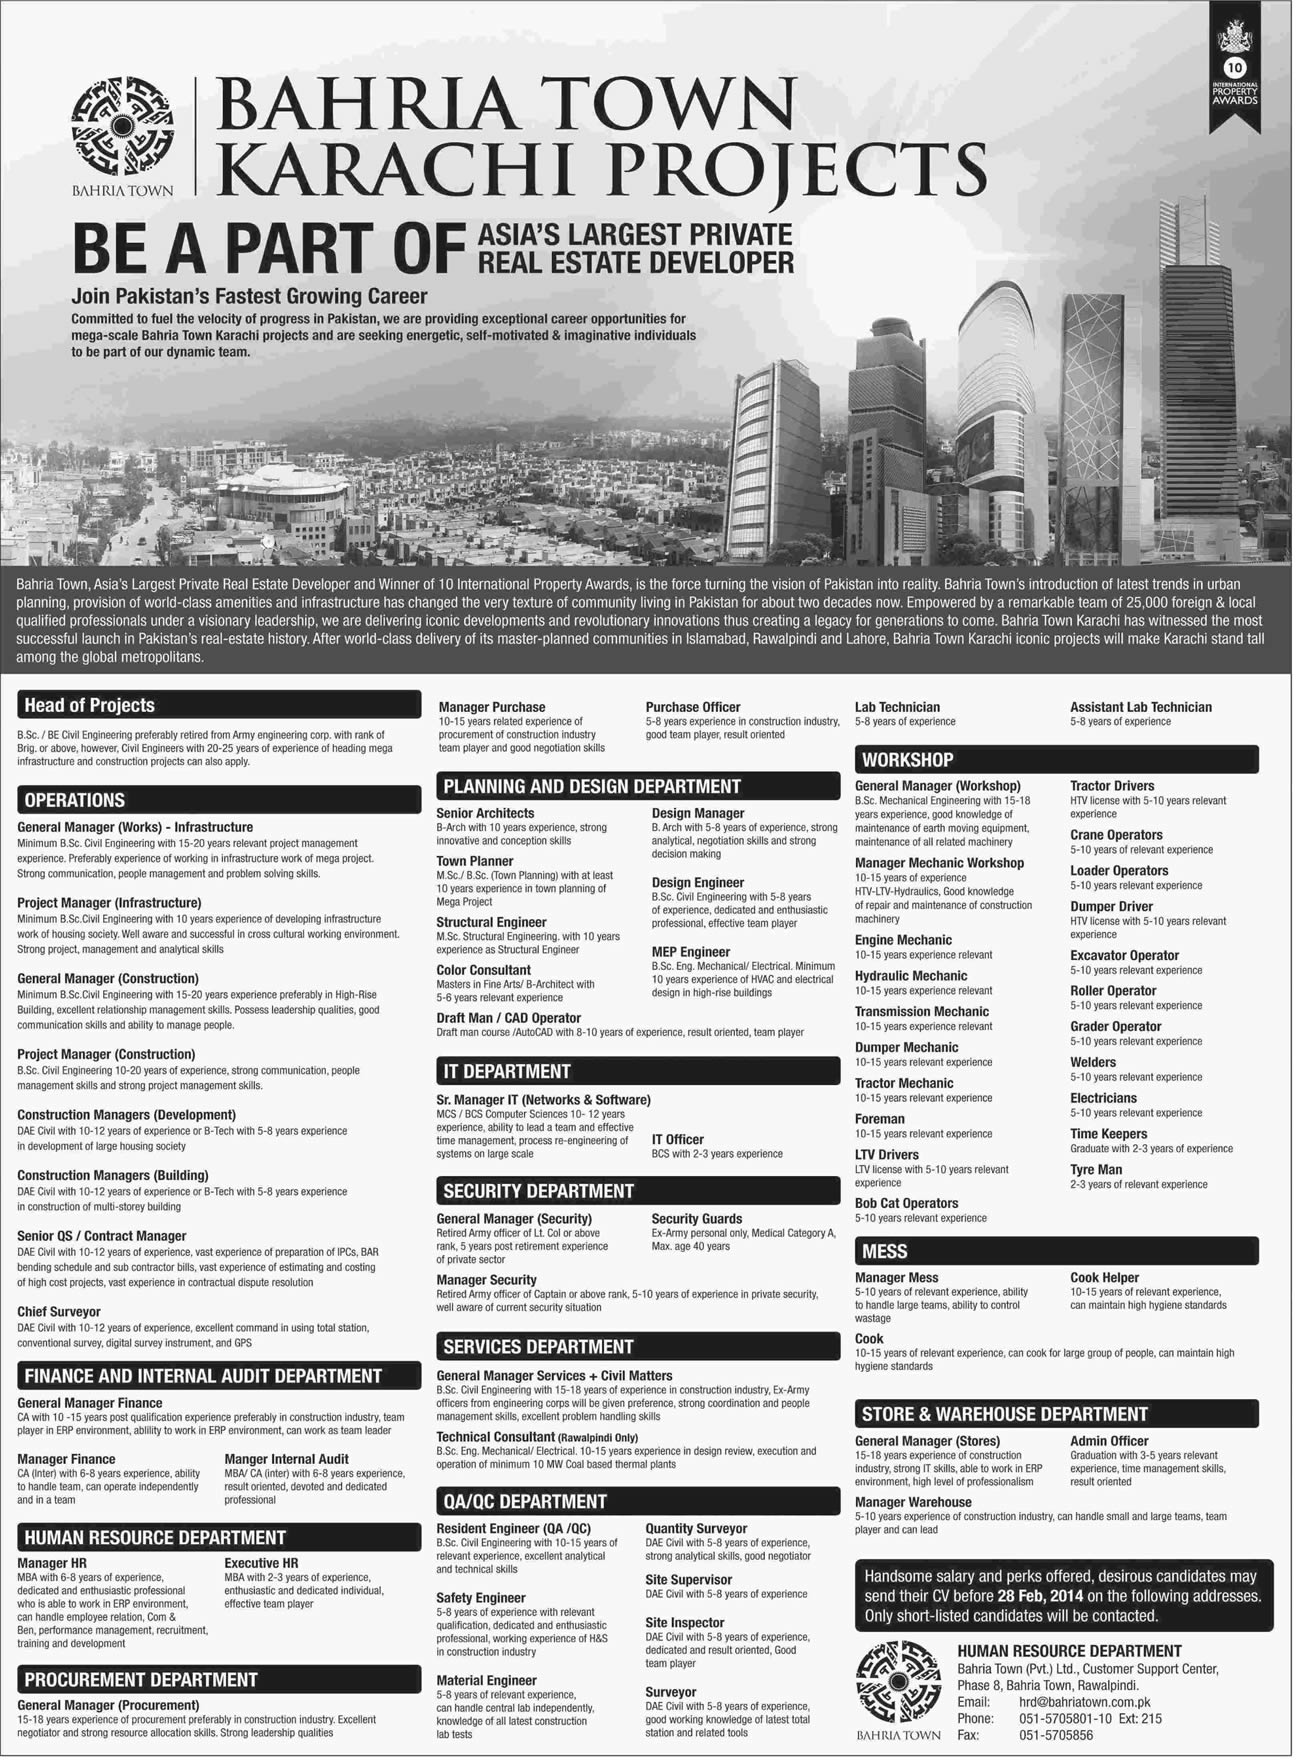 Bahria Town Karachi Project Jobs February 2014